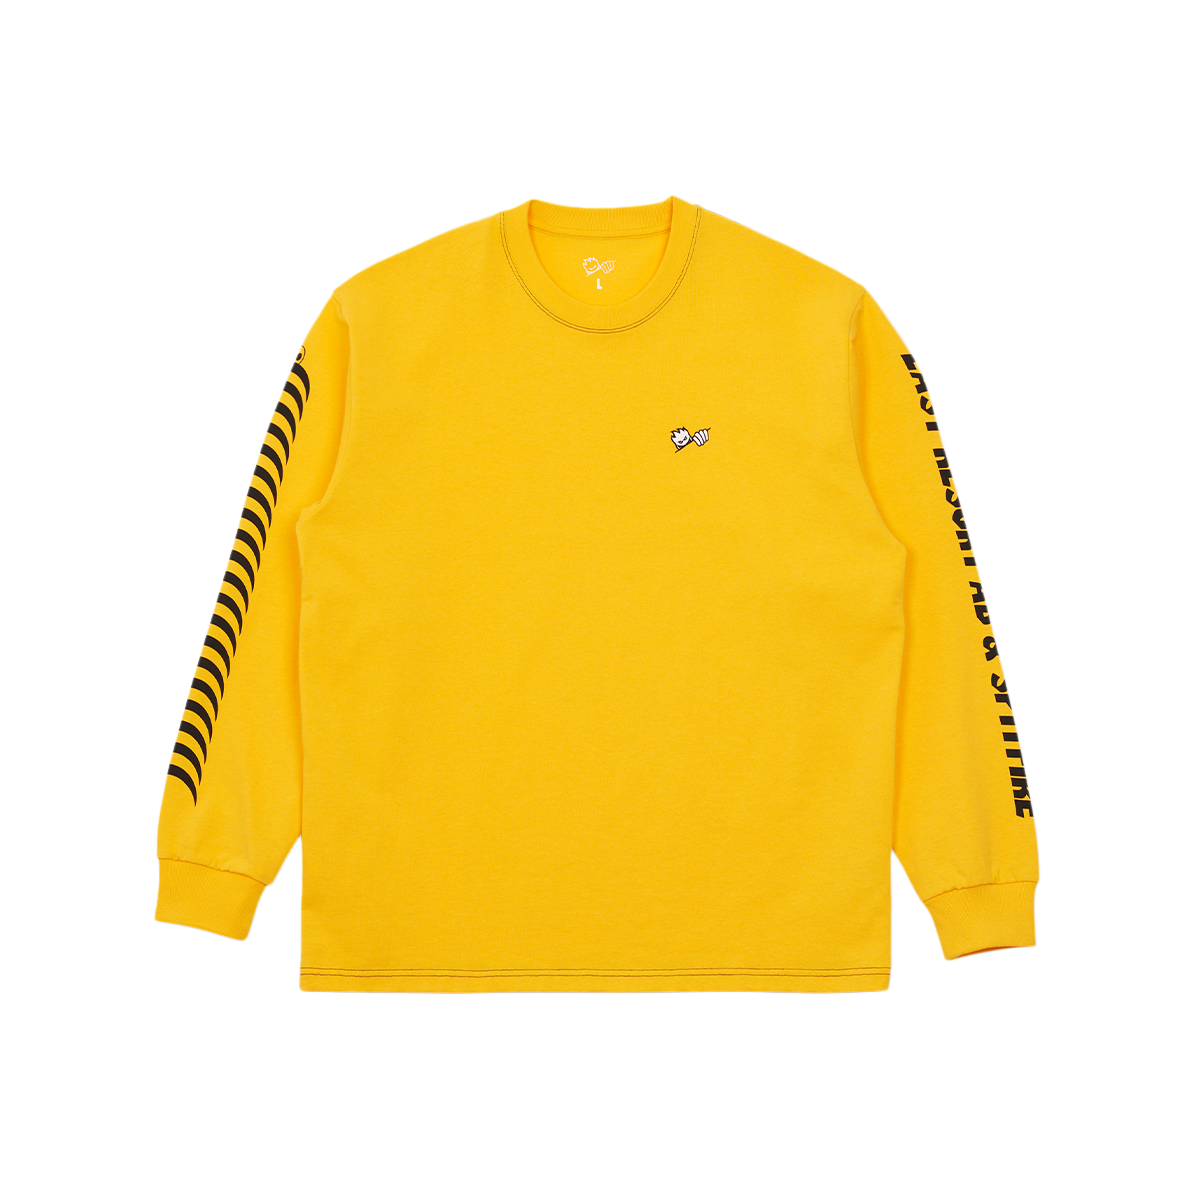 Last Resort AB x Spitfire Long Sleeve T-Shirt - Yellow